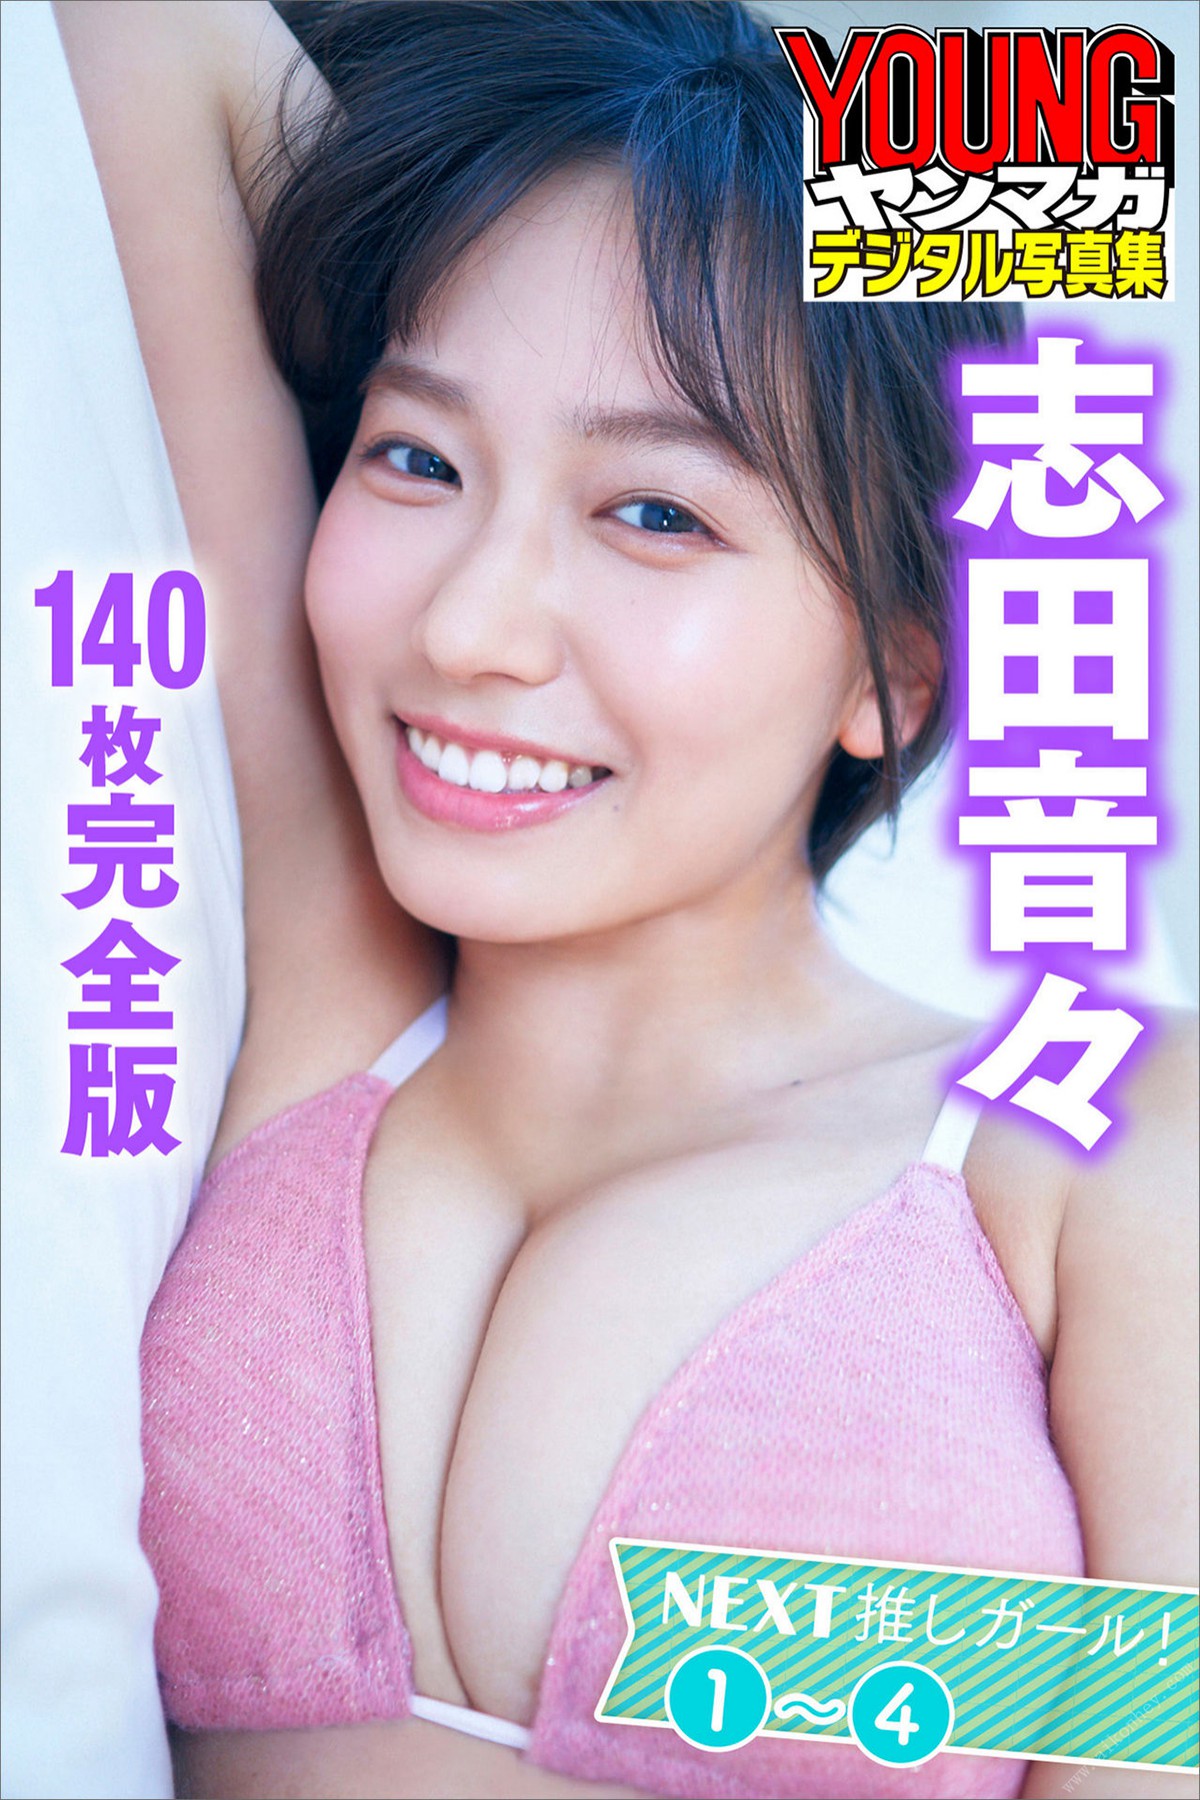 Young Magazine Photobook 2022-09-16 Nene Shida 志田音々 – Next Oshi Girl 1-4 Next Part 1